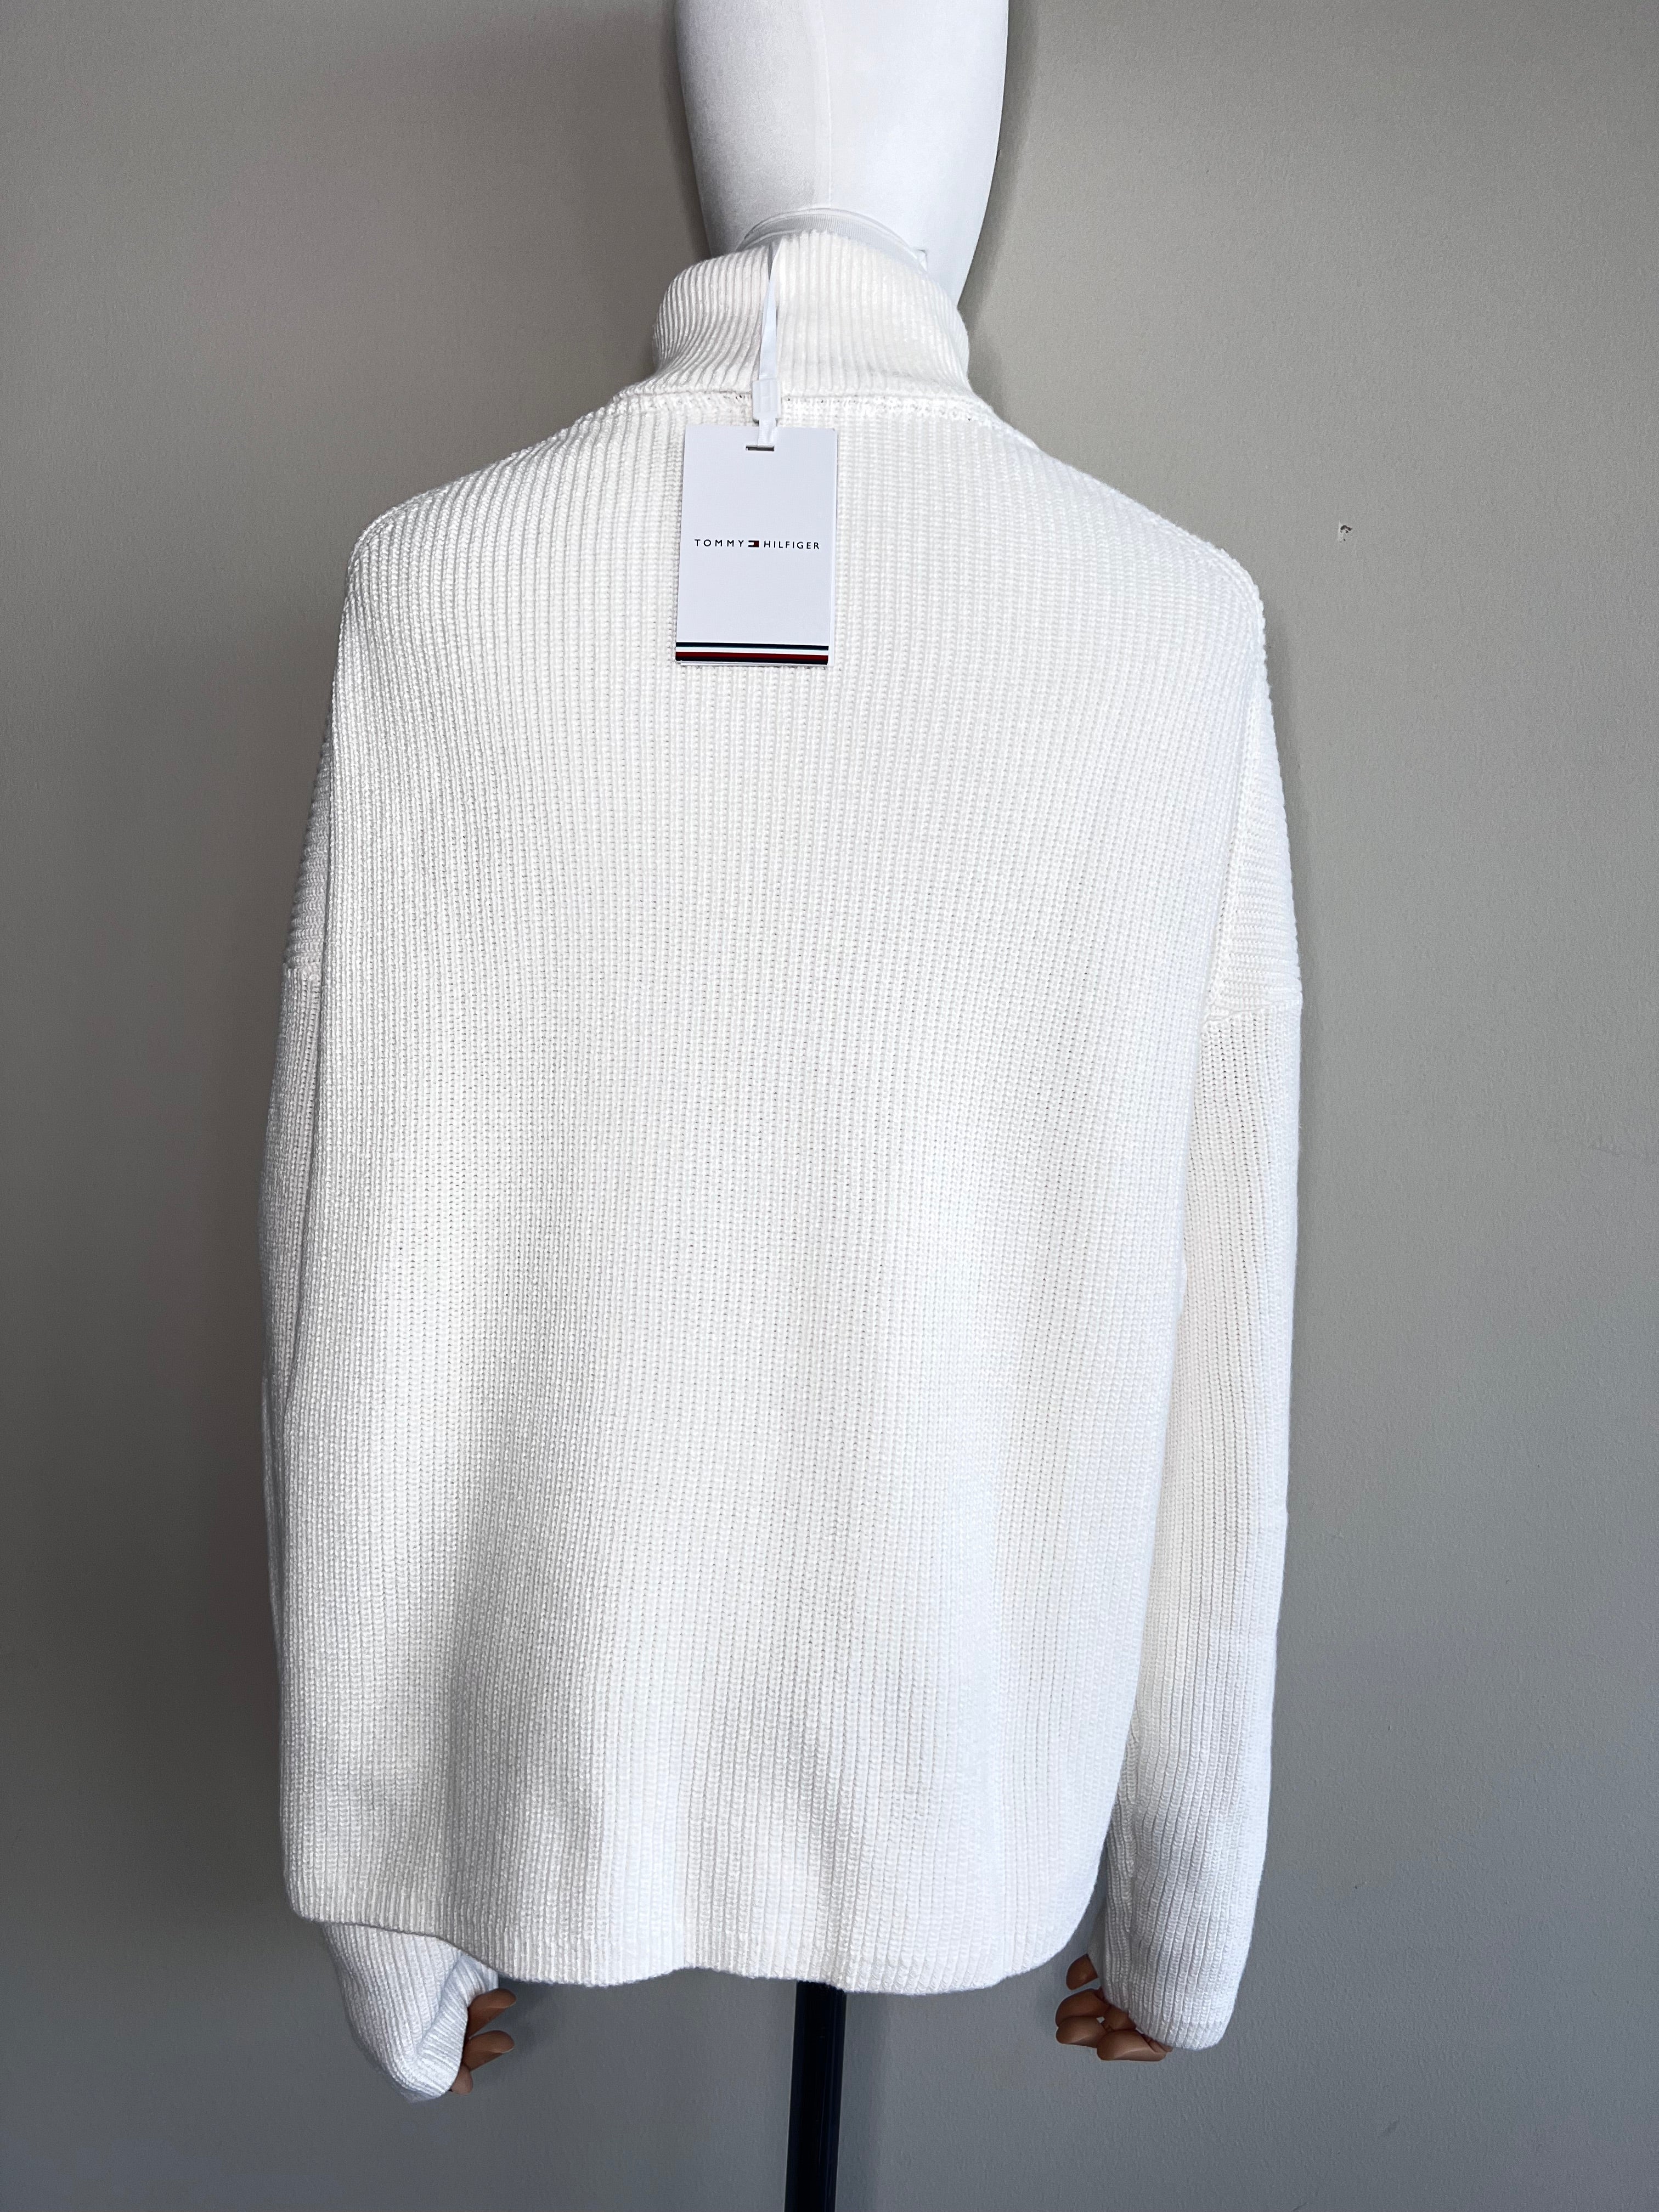 White Knitwear turtle neck sweater - Tommy Hilfiger